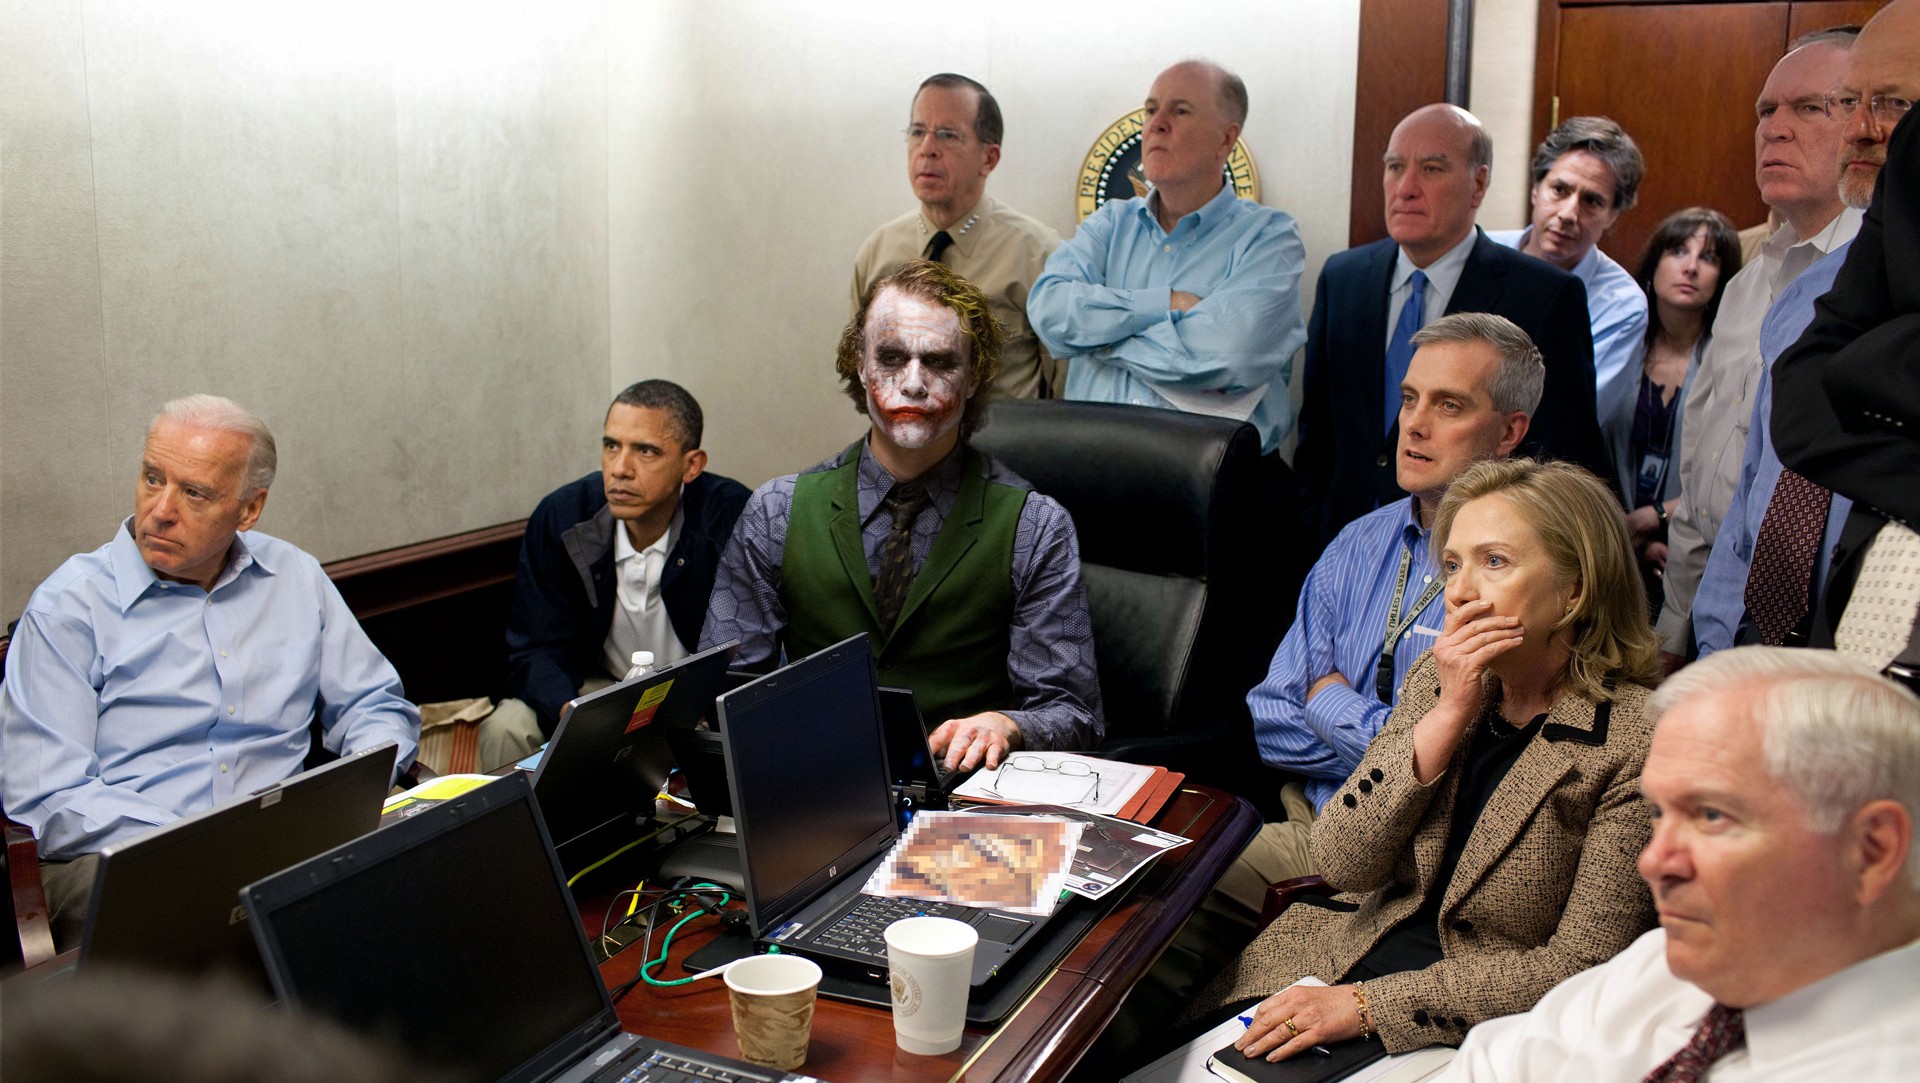 People 1920x1083 Joker Barack Obama photoshopped humor photo manipulation Heath Ledger political figure murder